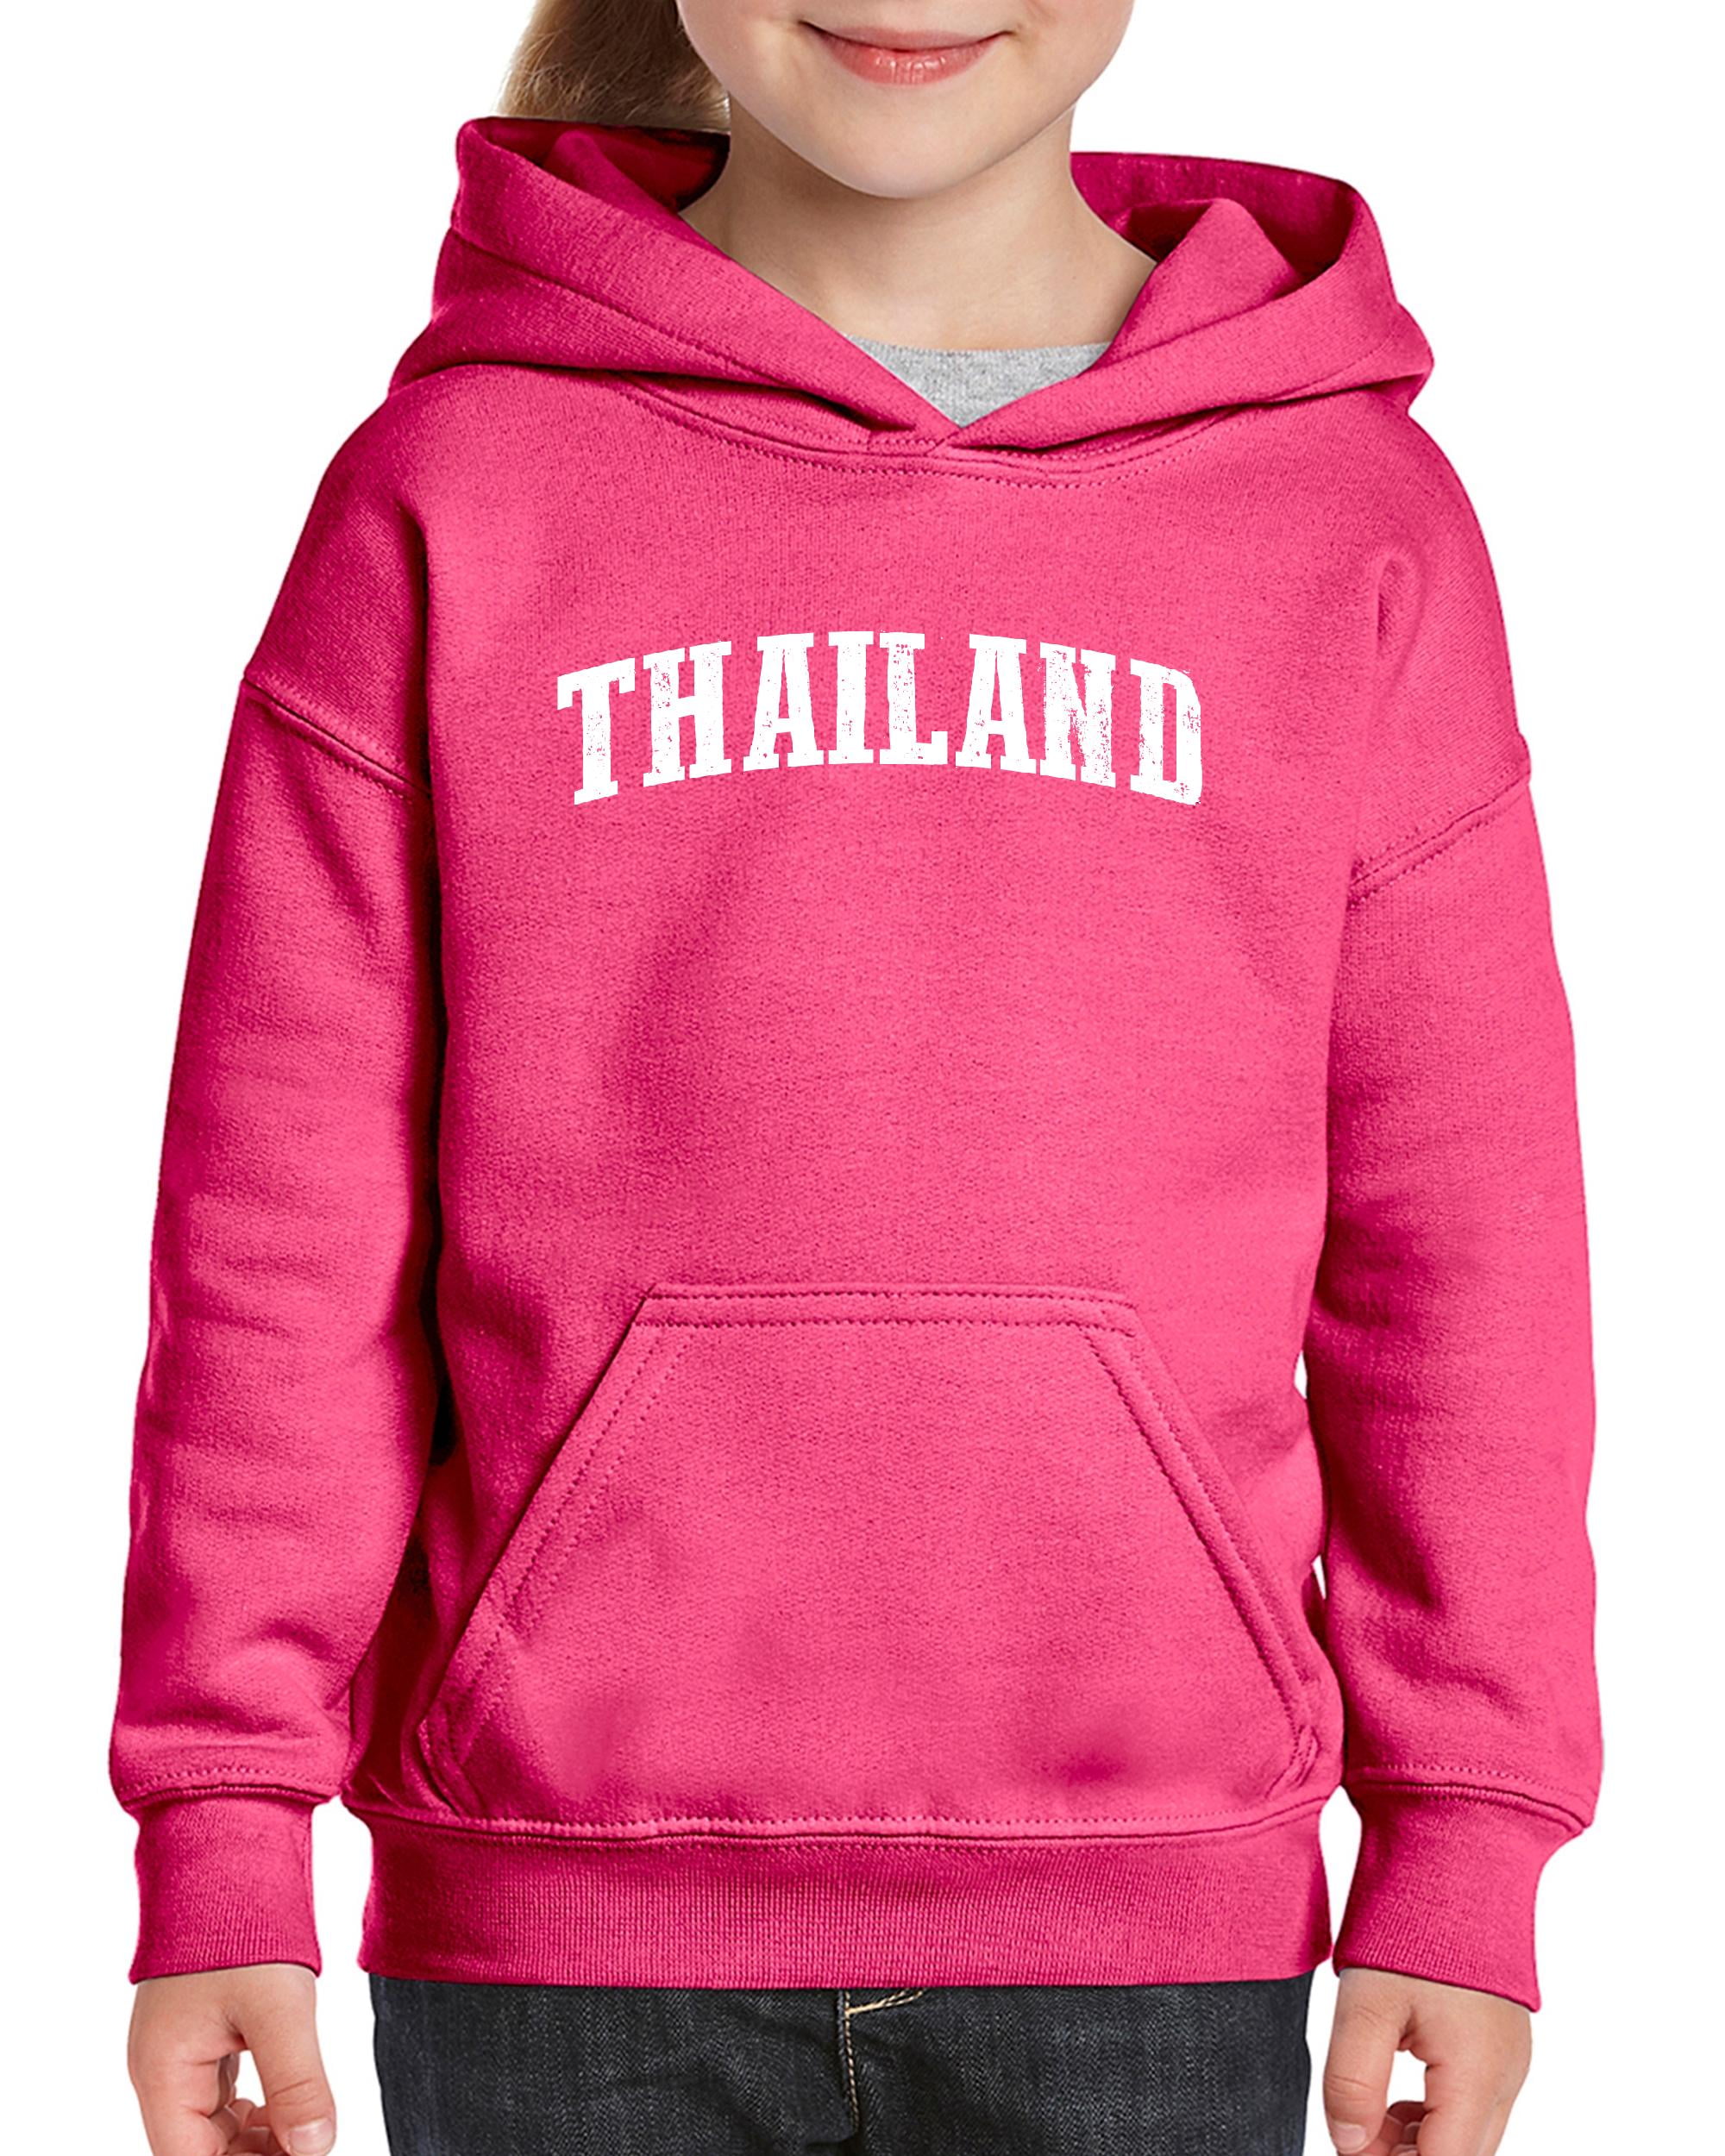 Artix - Big Girls Hoodies and Sweatshirts - Thailand - Walmart.com